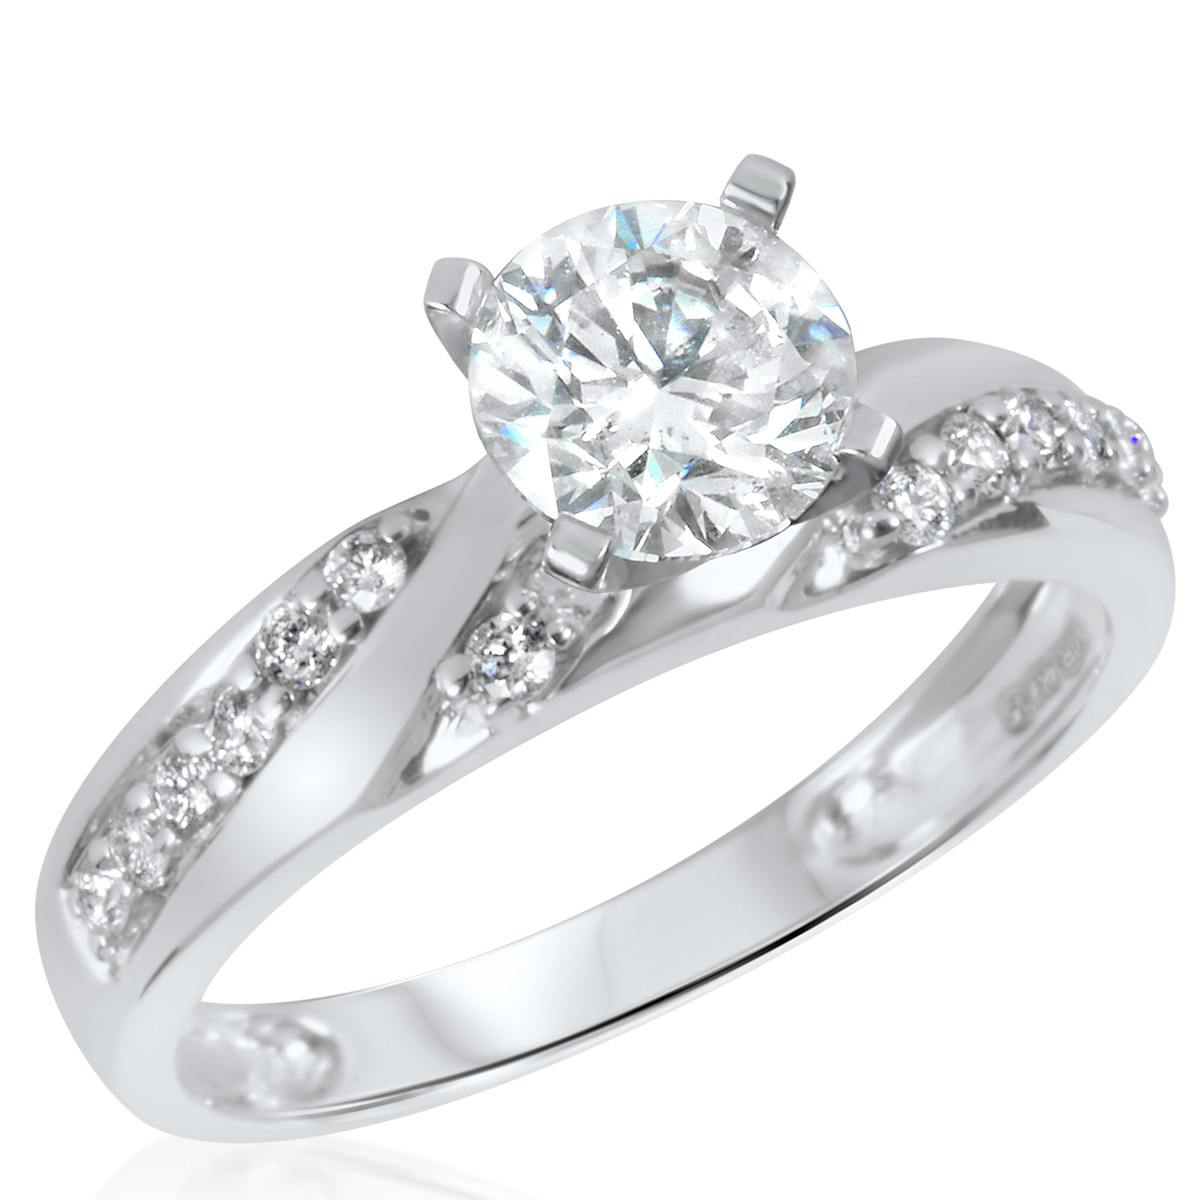 White Gold Wedding Rings Sets
 Bridal Sets Bridal Sets Wedding Rings White Gold Size 4